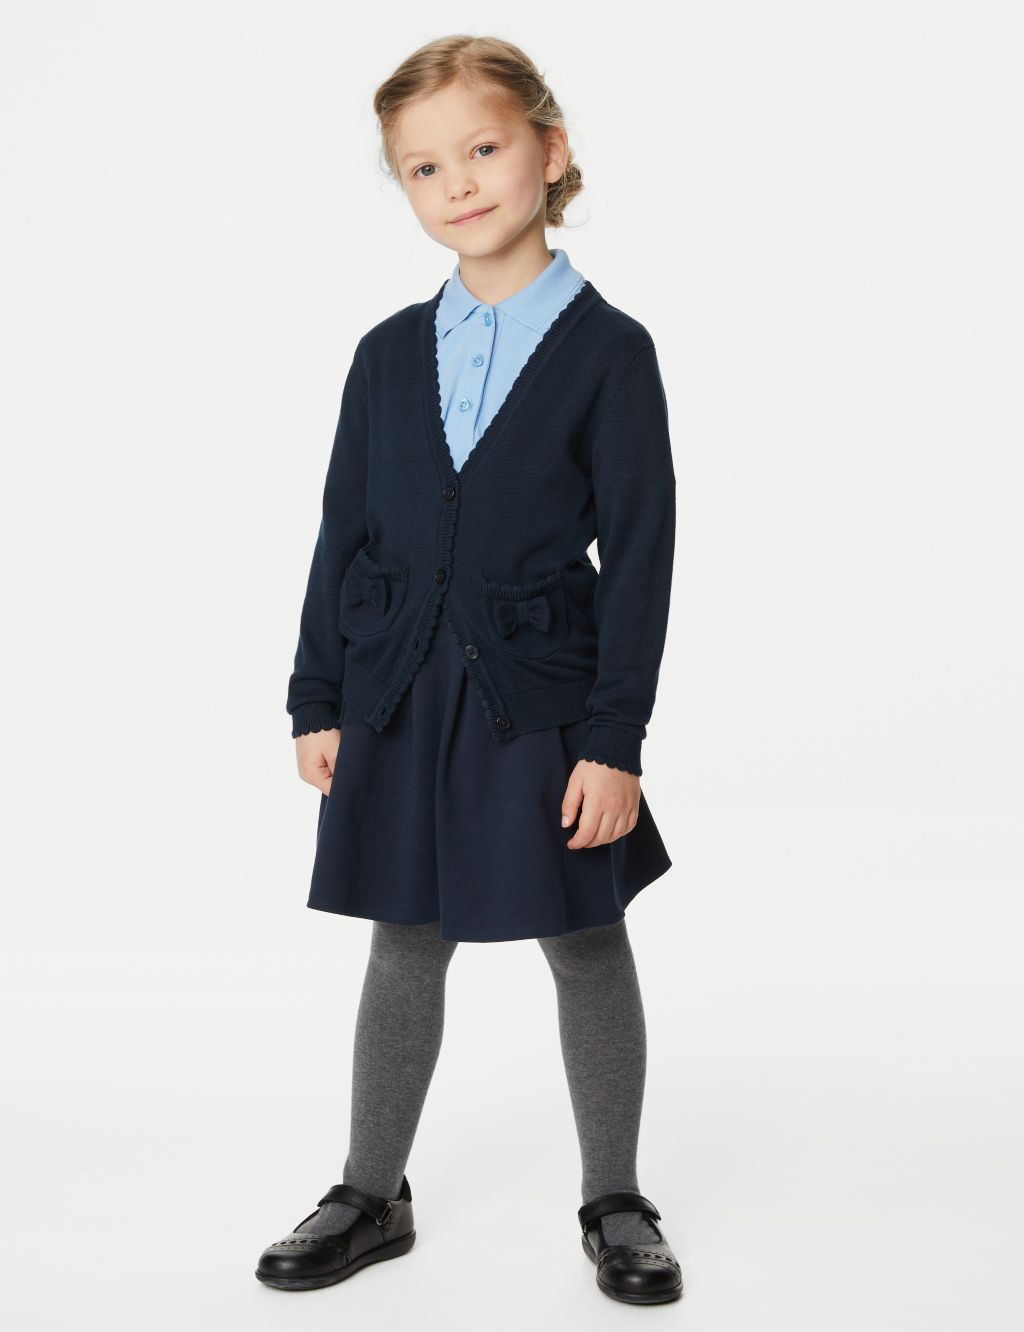 Girls’ Pure Cotton Bow Pocket School Cardigan (3-18 Yrs) image 2